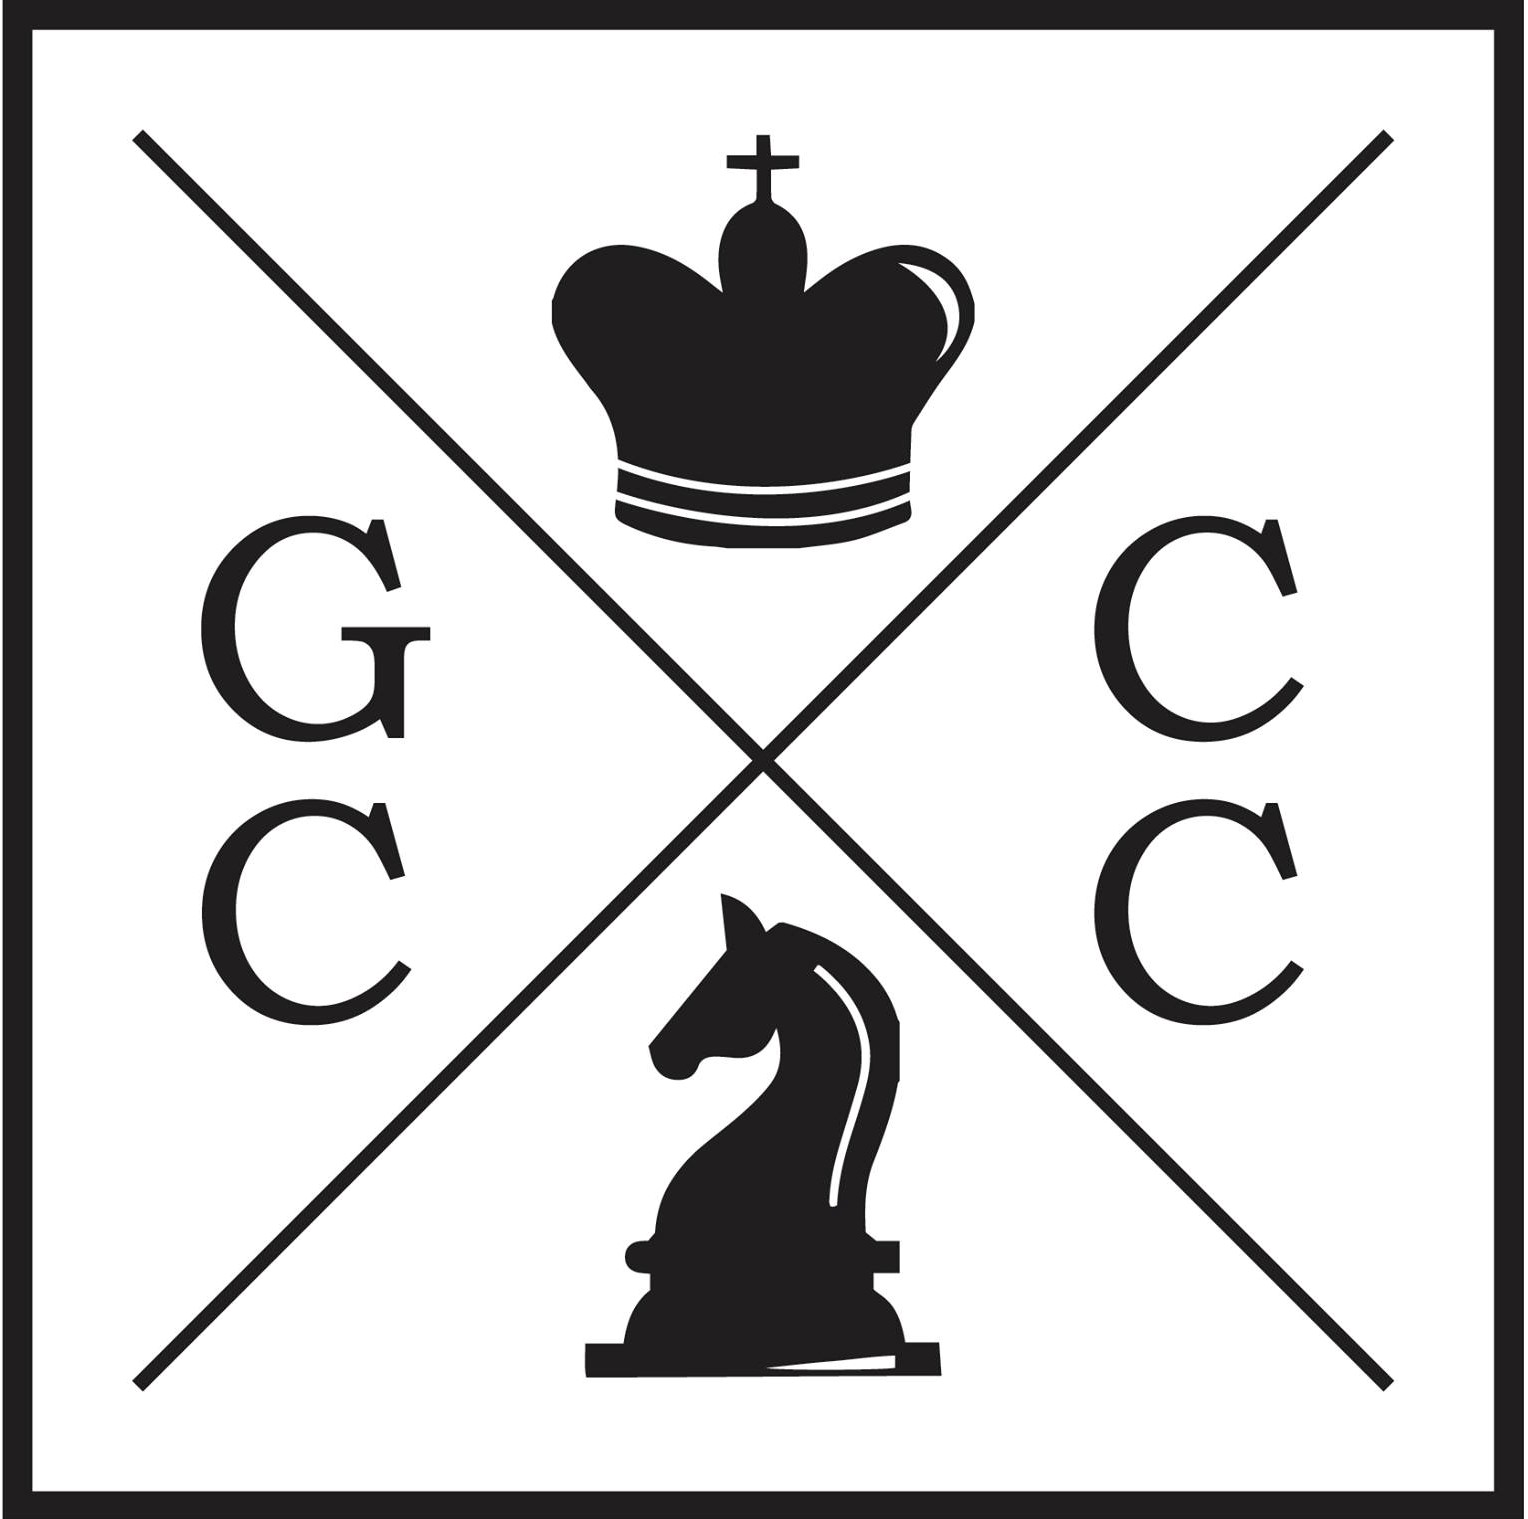 Gold Coast Chess Club logo